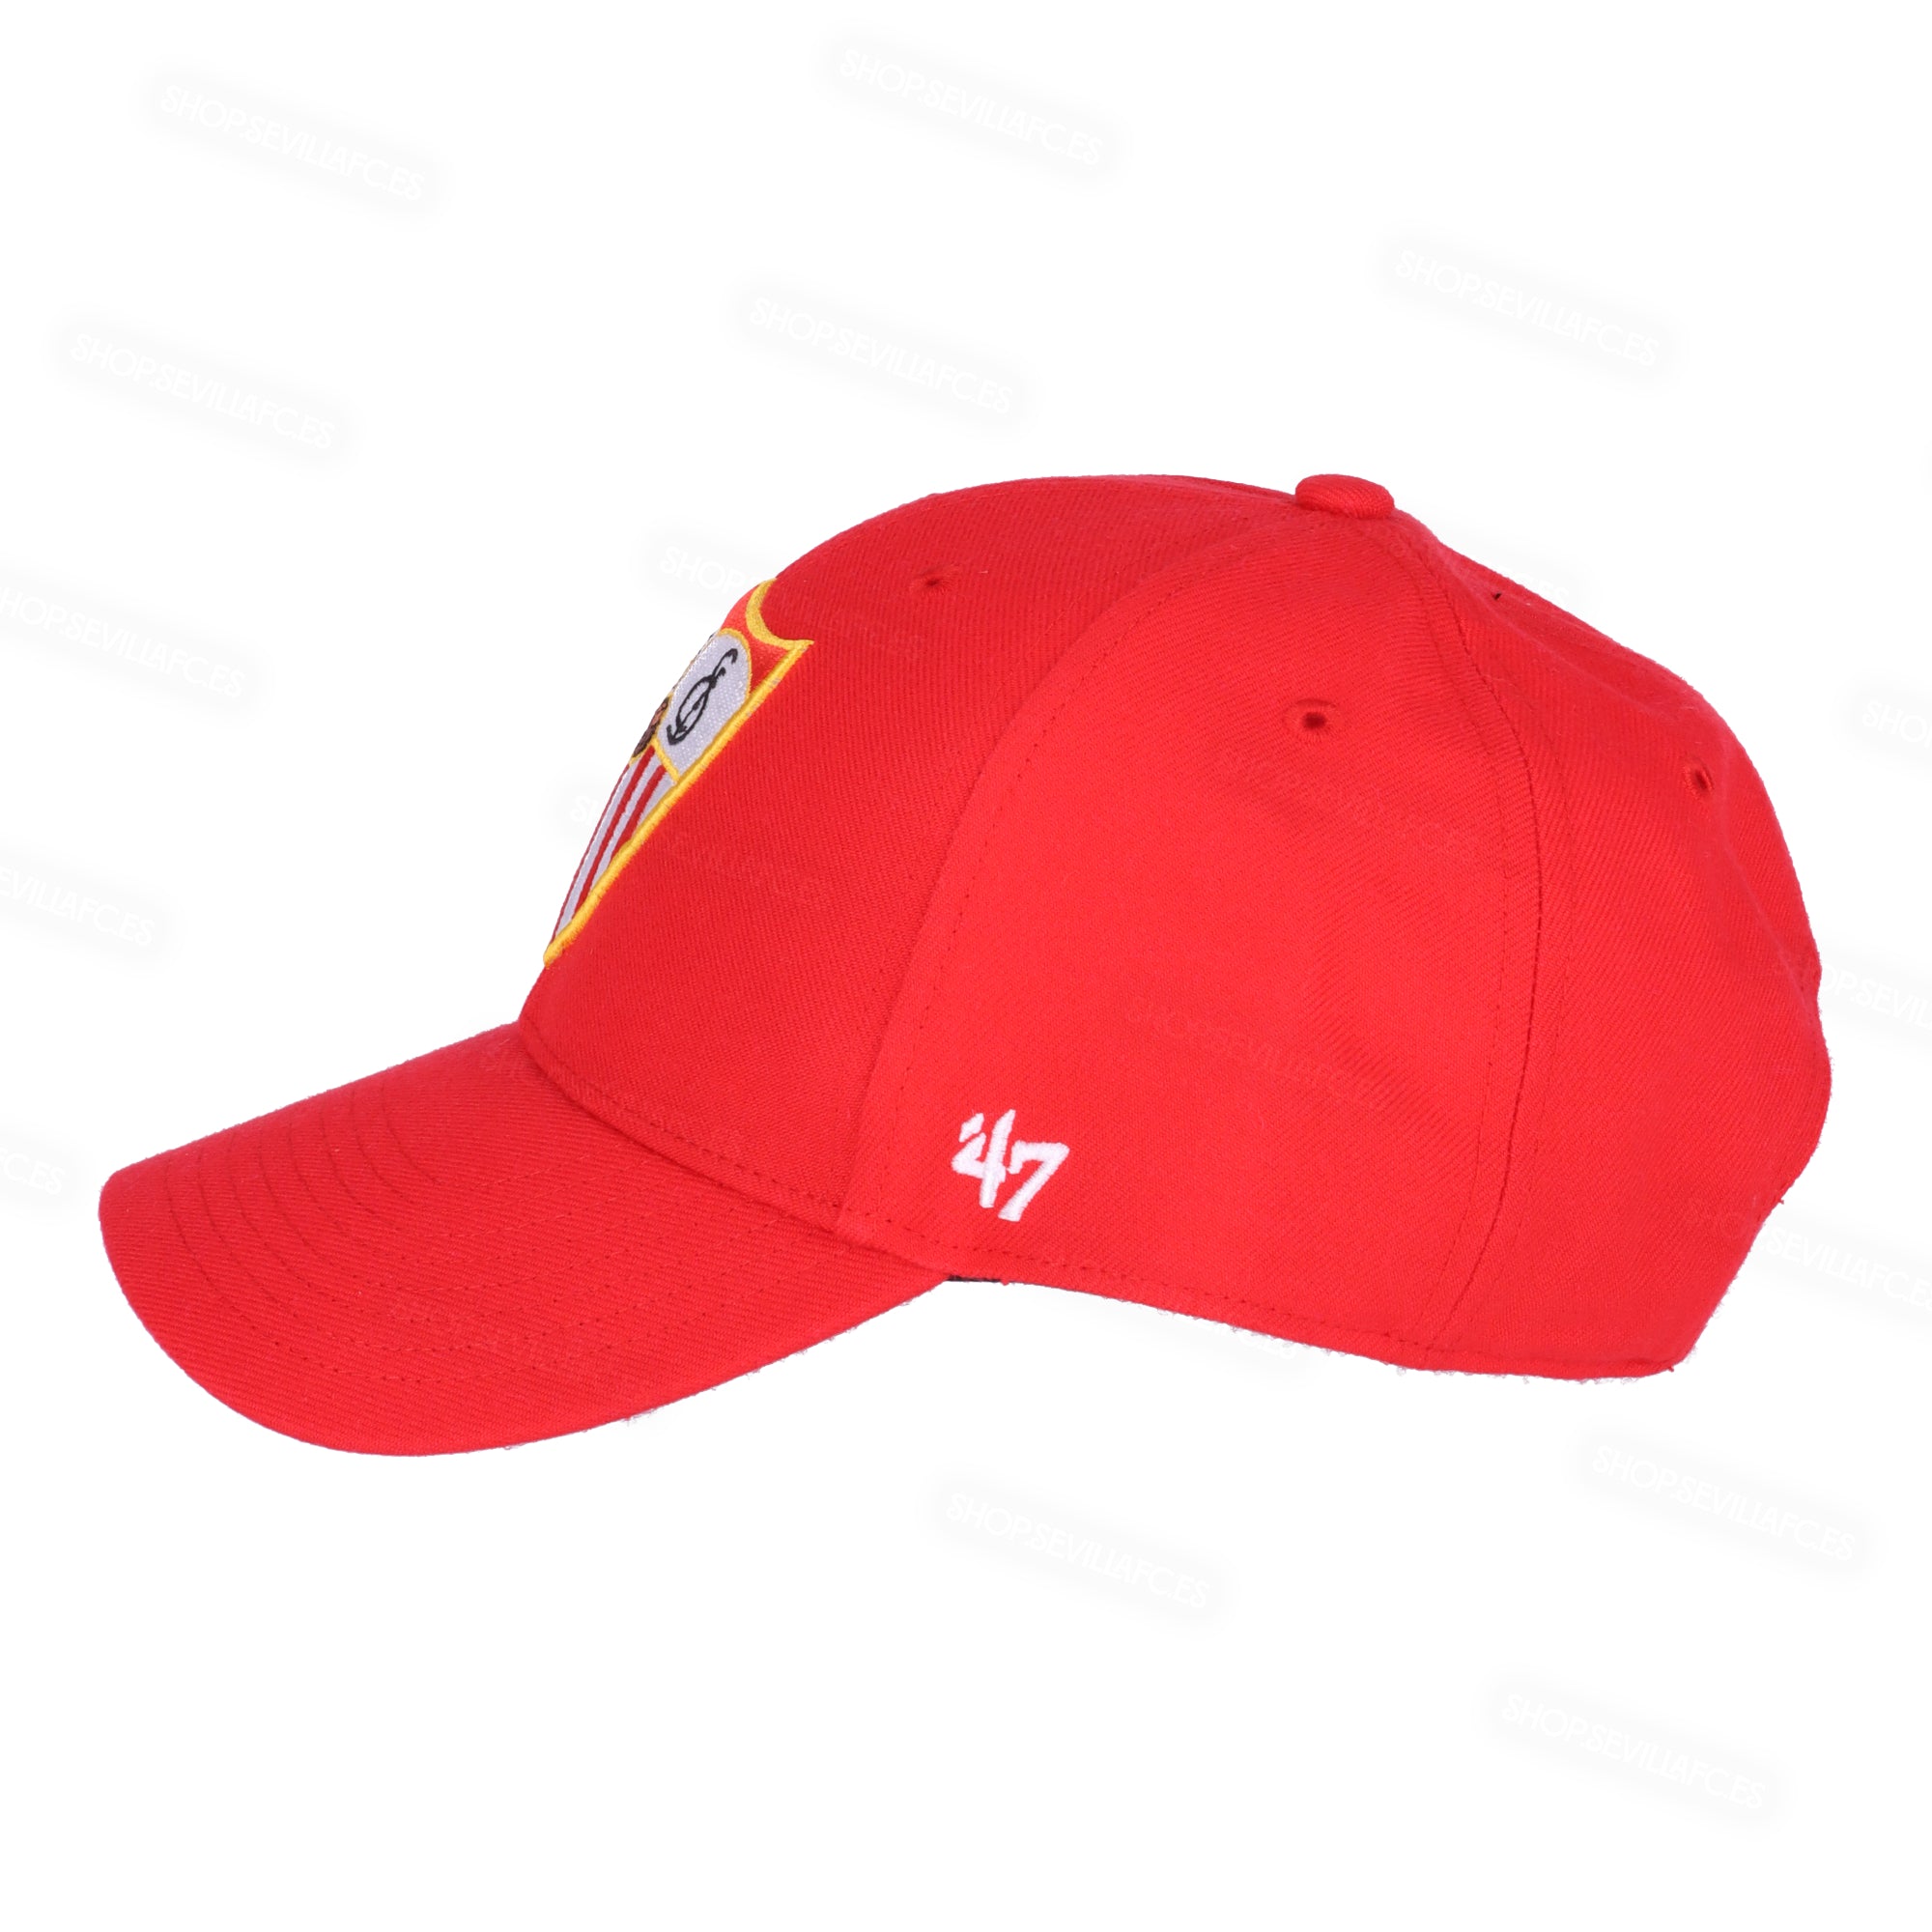 Gorra roja junior